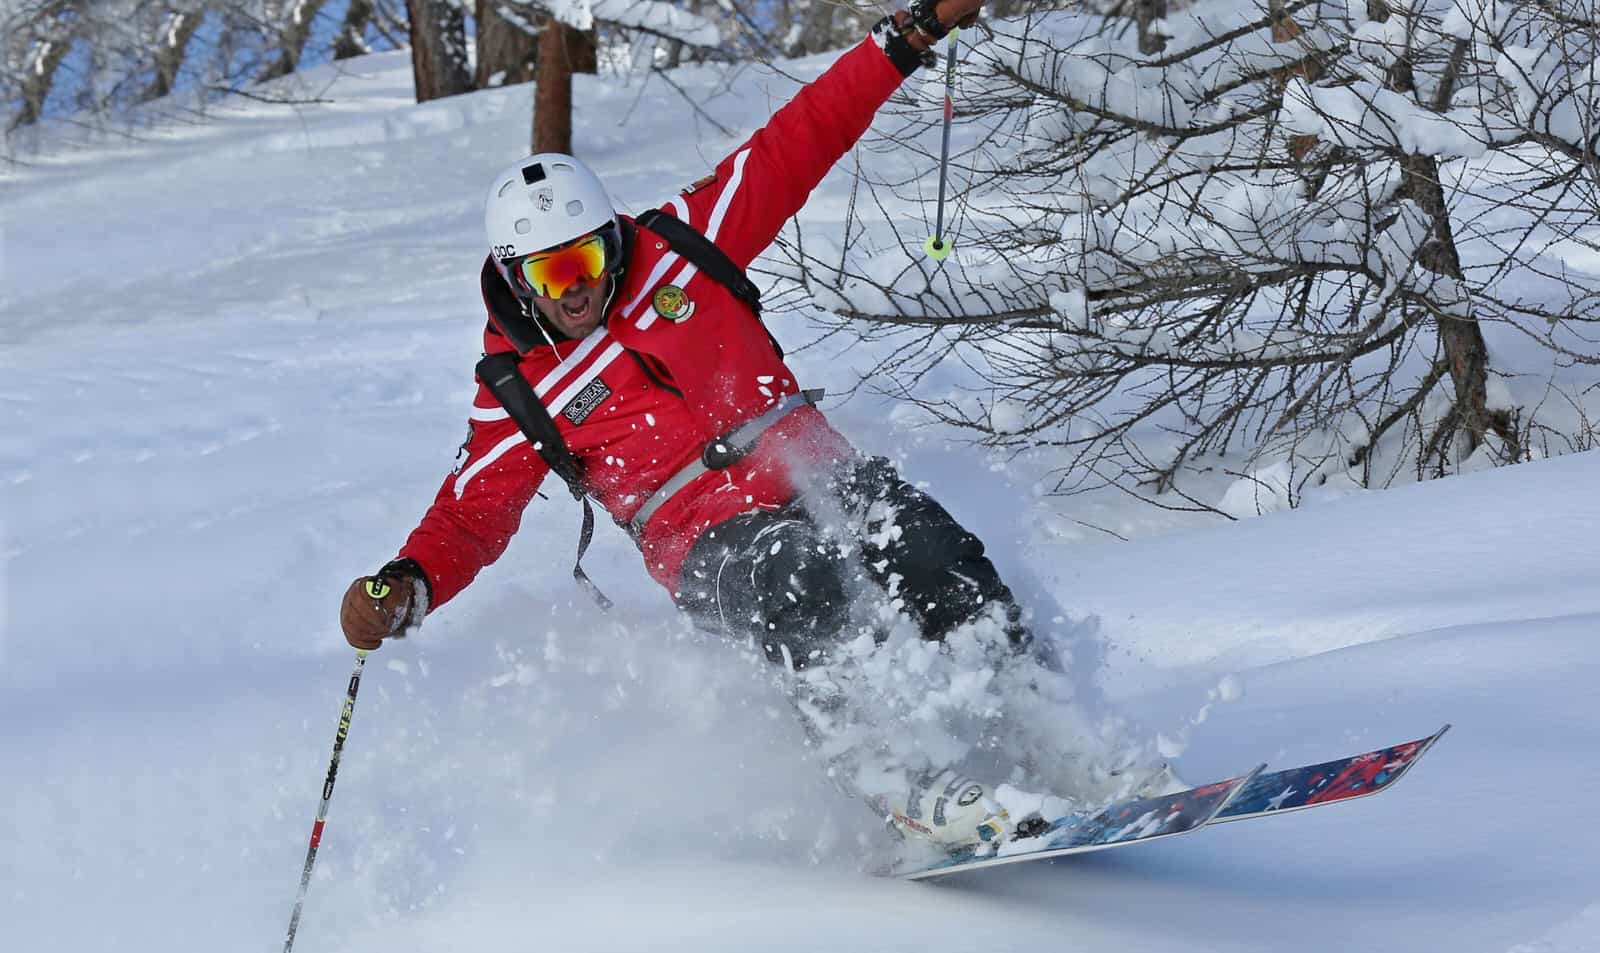 cervinia ski school